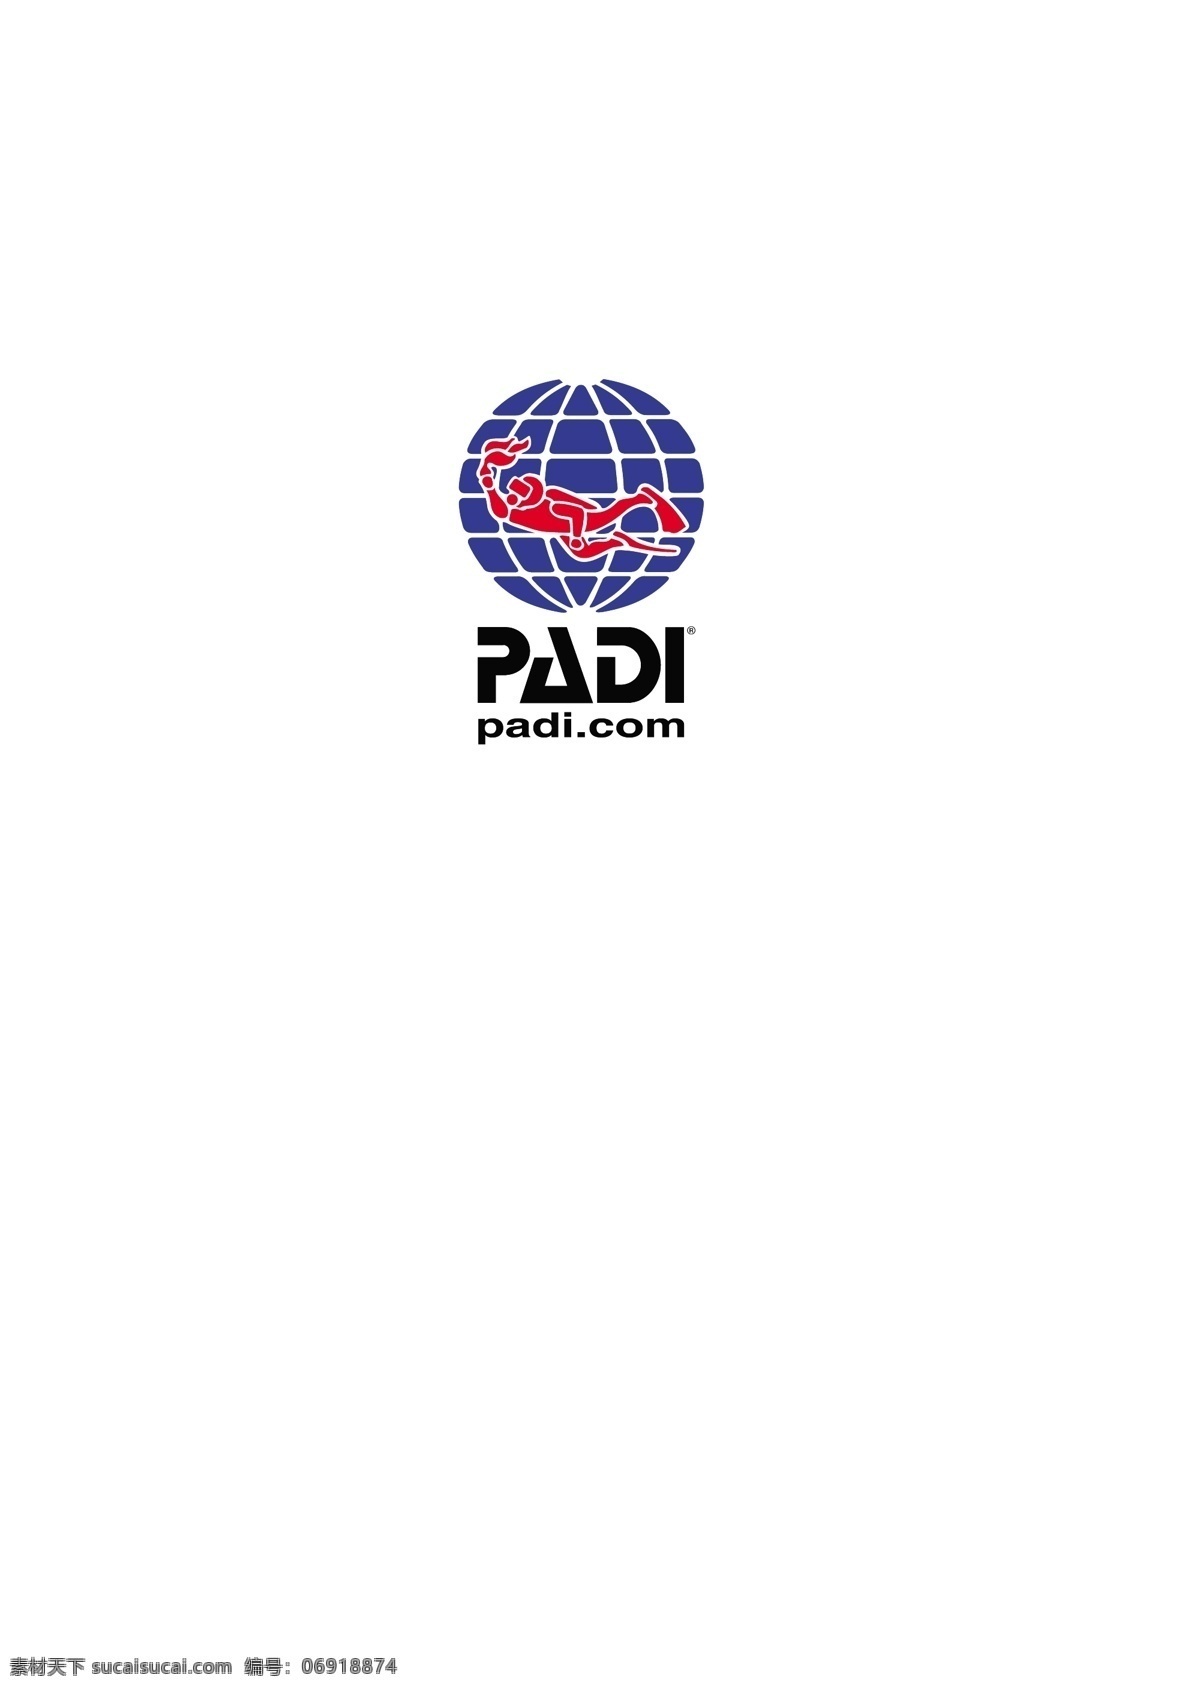 padi logo大全 logo 设计欣赏 商业矢量 矢量下载 体育 比赛 标志 标志设计 欣赏 网页矢量 矢量图 其他矢量图